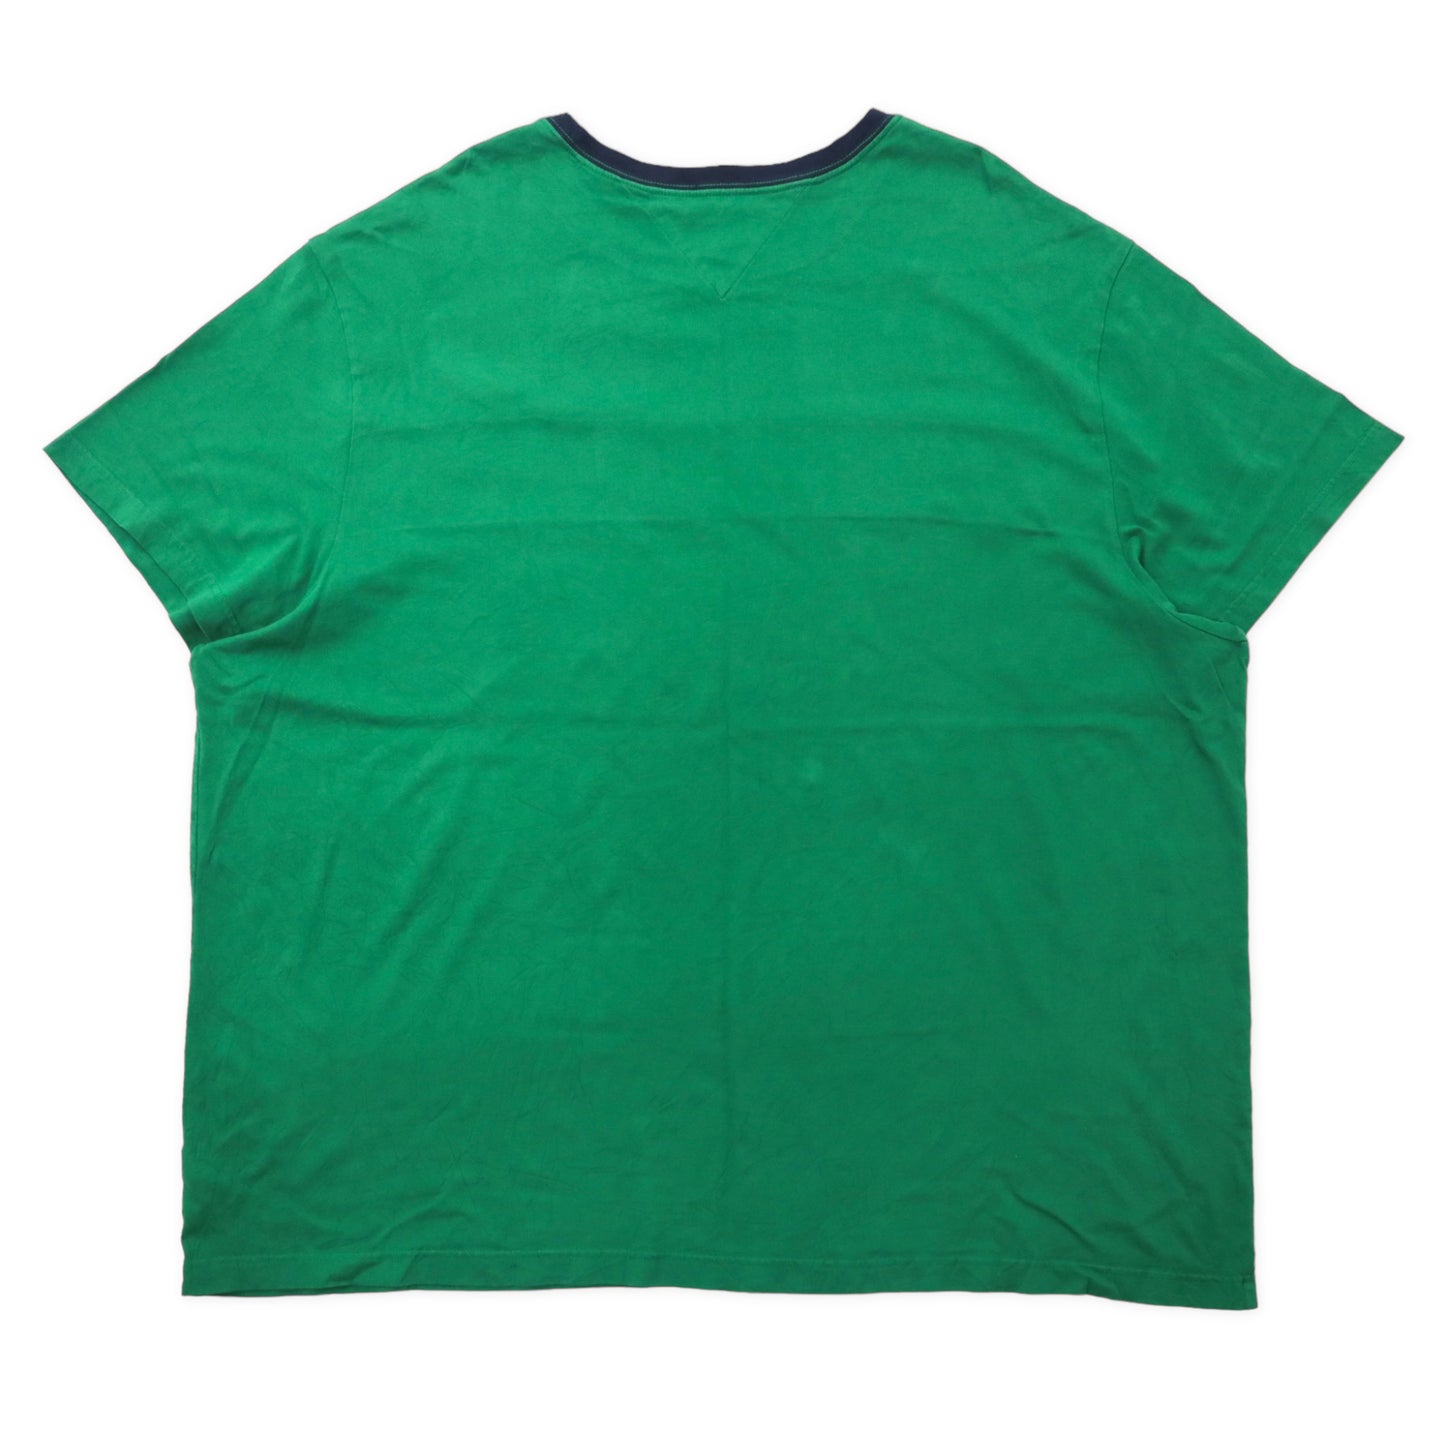 TOMMY HILFIGER フラッグロゴ リンガーTシャツ 4XL グリーン コットン ロゴ刺繍 ビッグサイズ